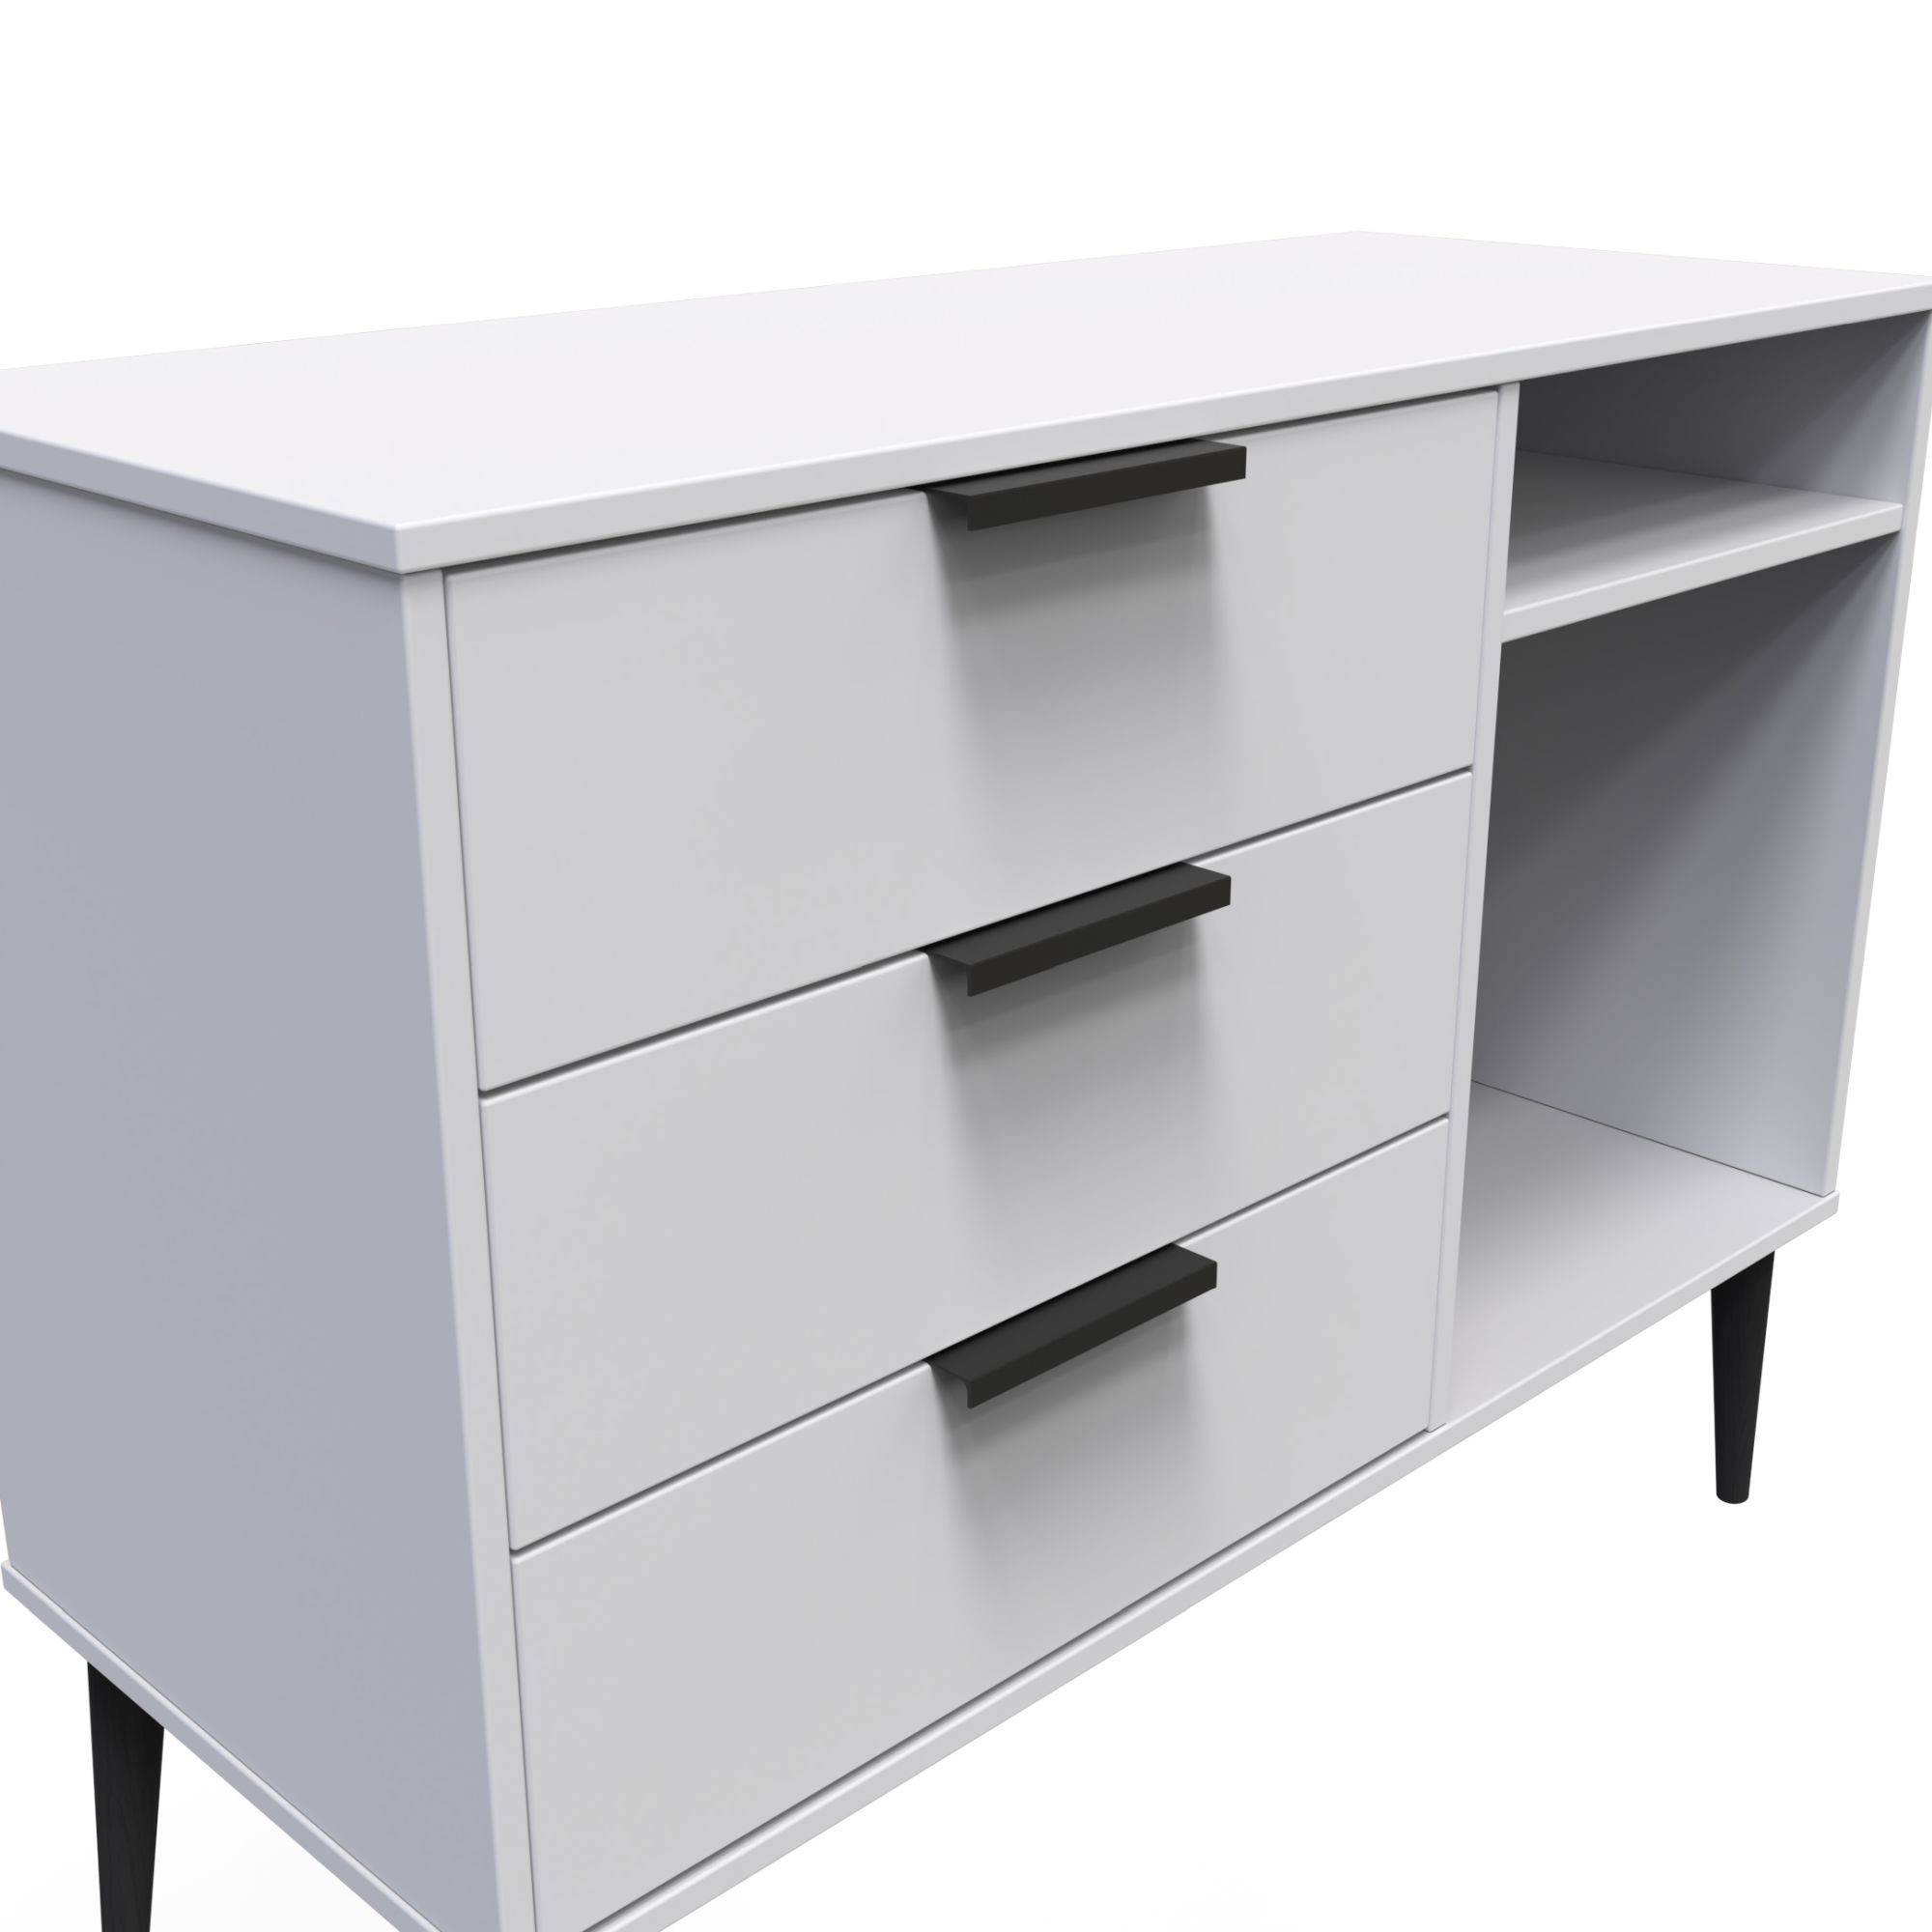 Hong Kong Ready assembled Matt grey Media unit with 2 shelves & 3 drawers, (H)97cm x (W)74cm x (D)39.5cm